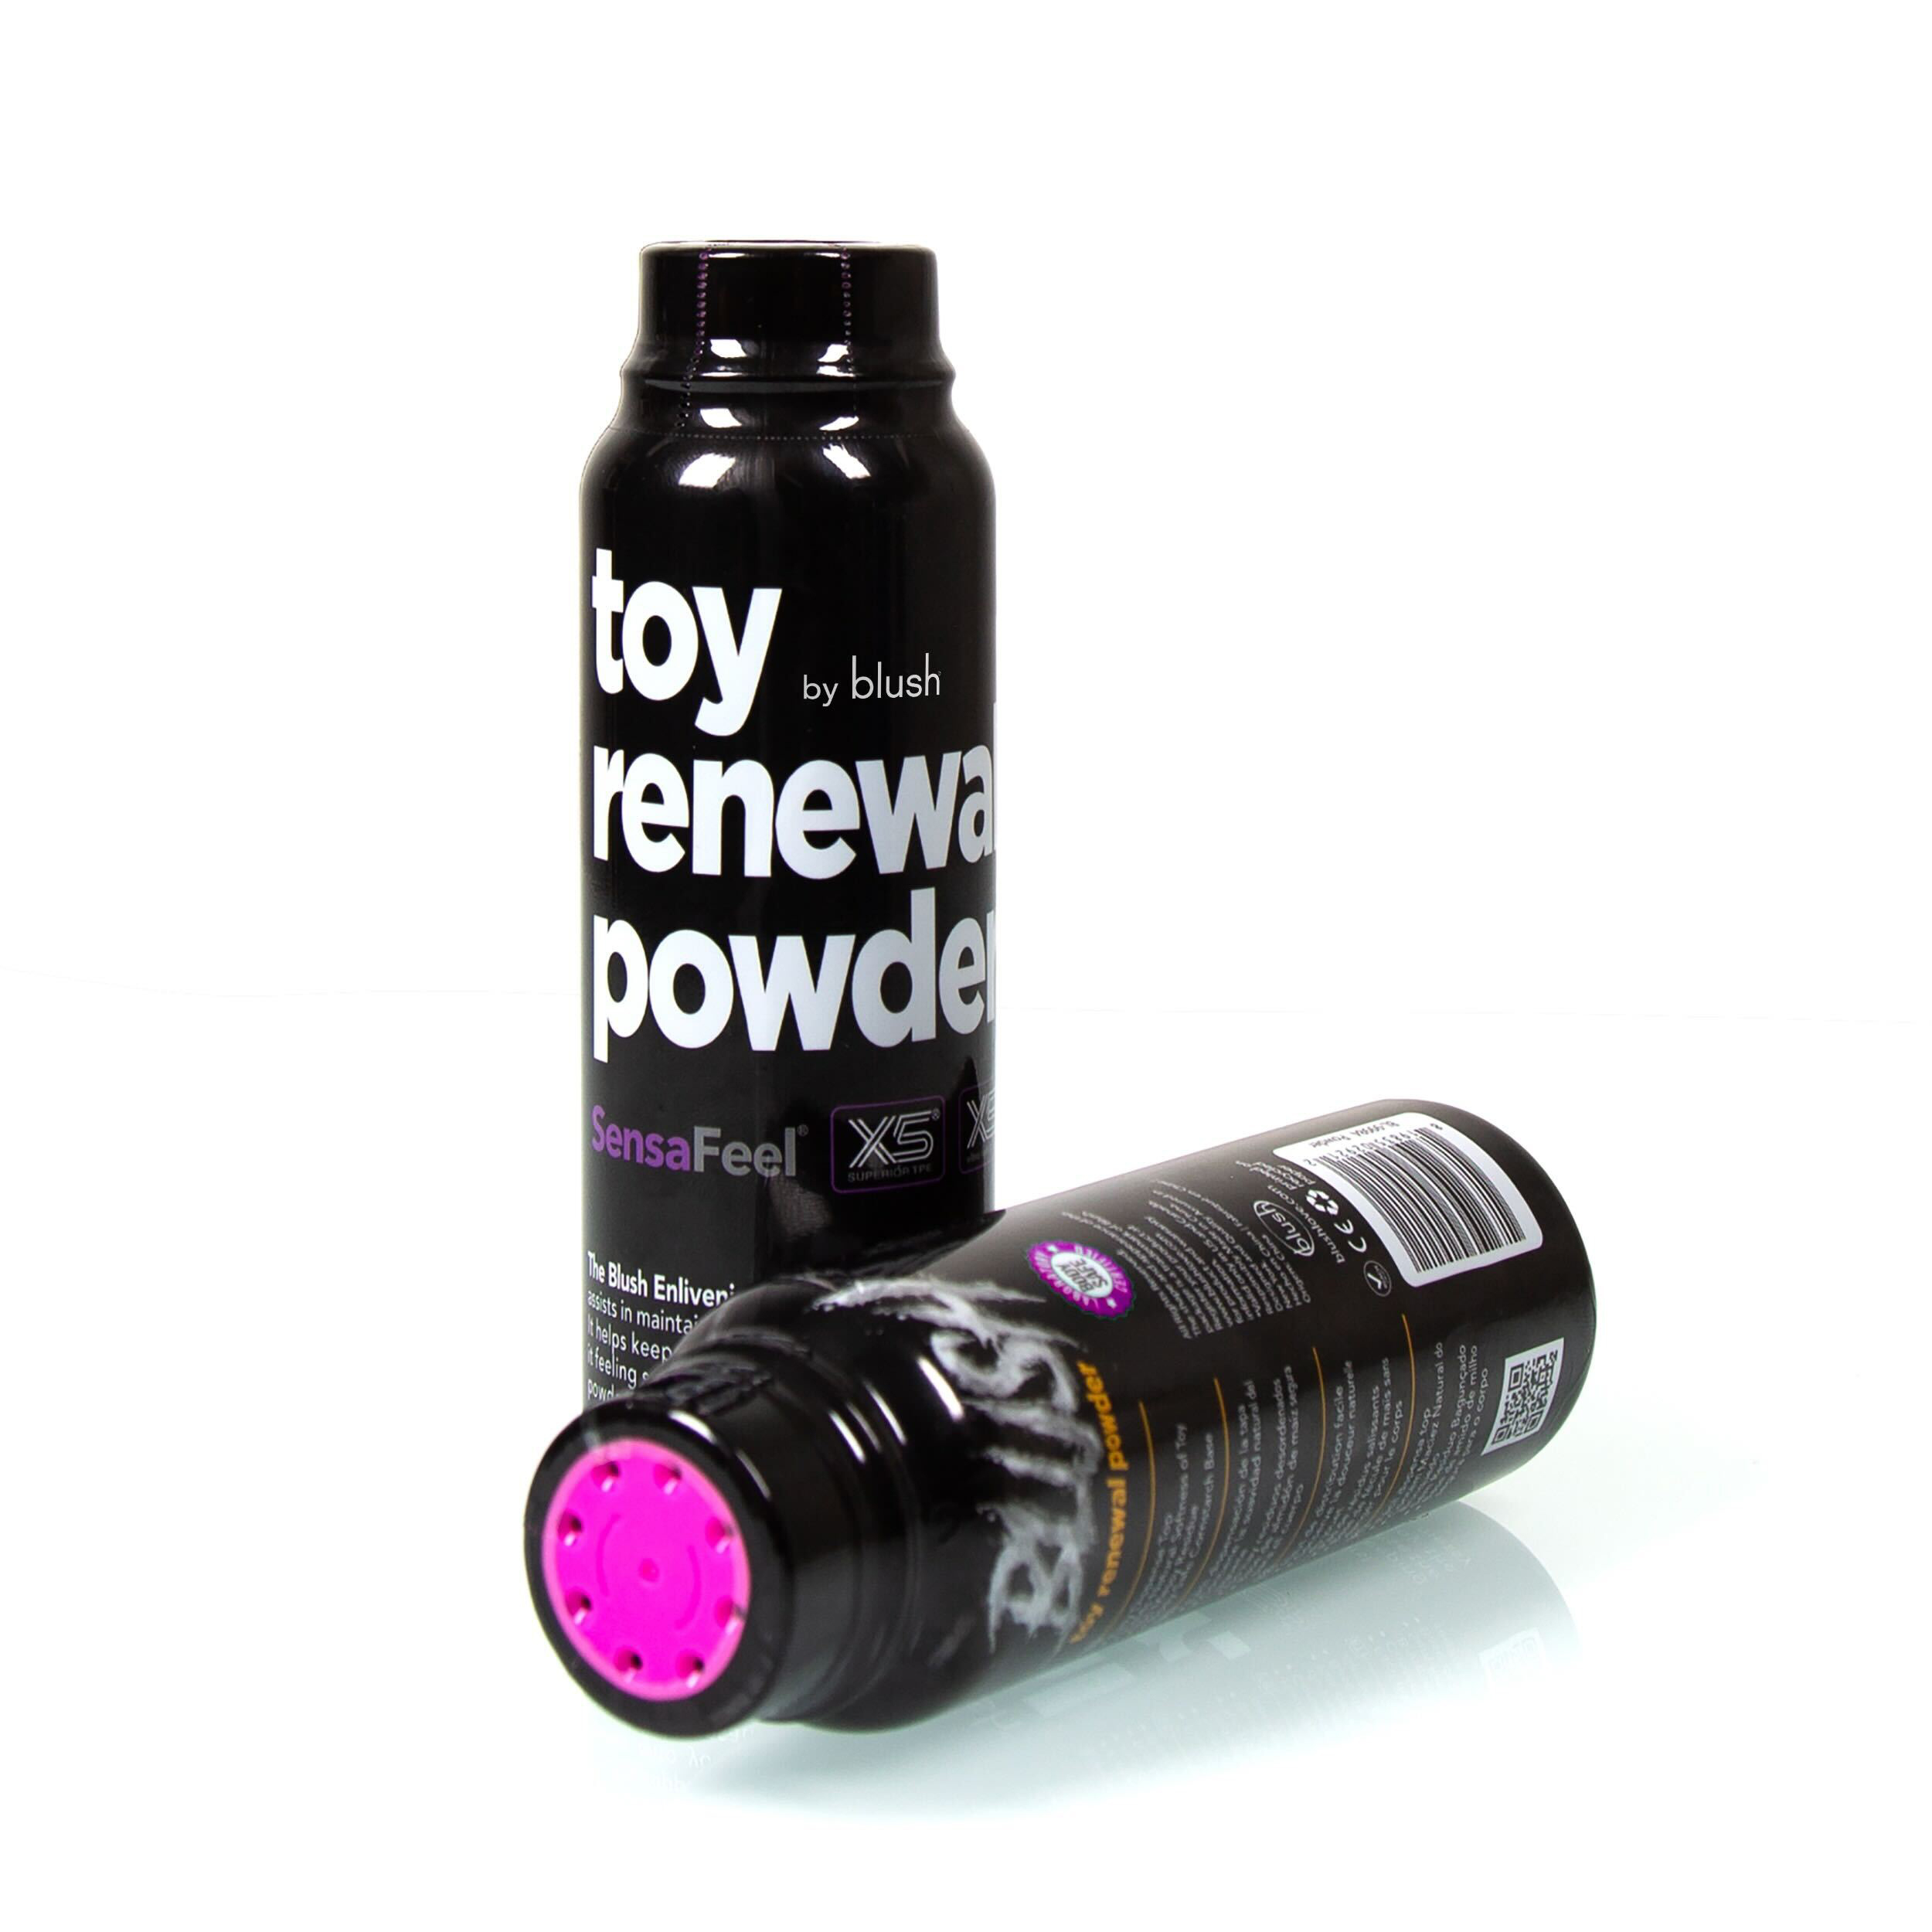 blush toy renewal powder . oz 